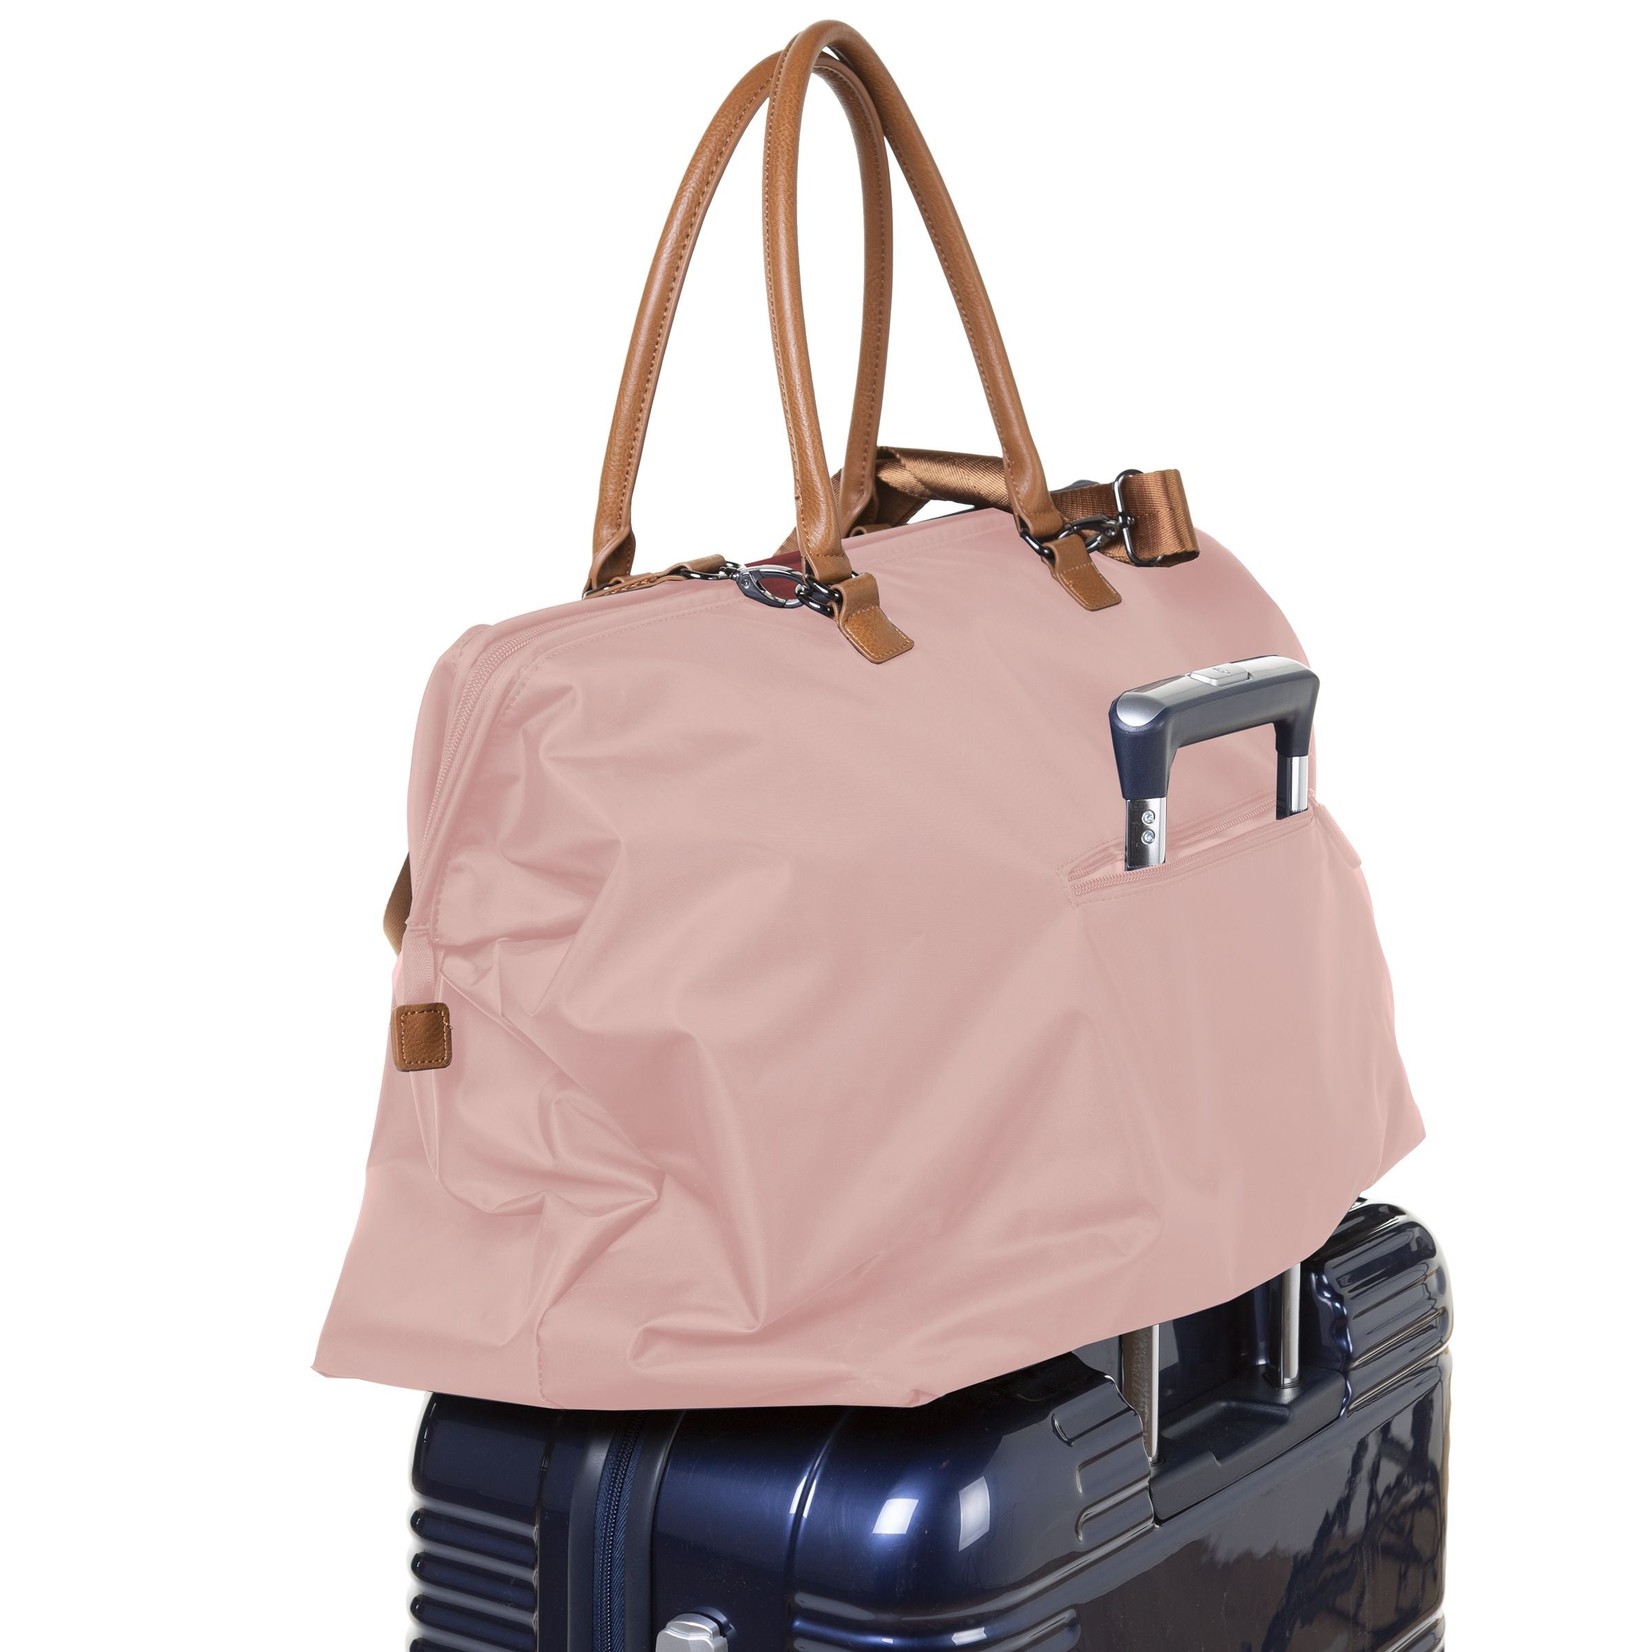 childhome Mommy bag roze koper